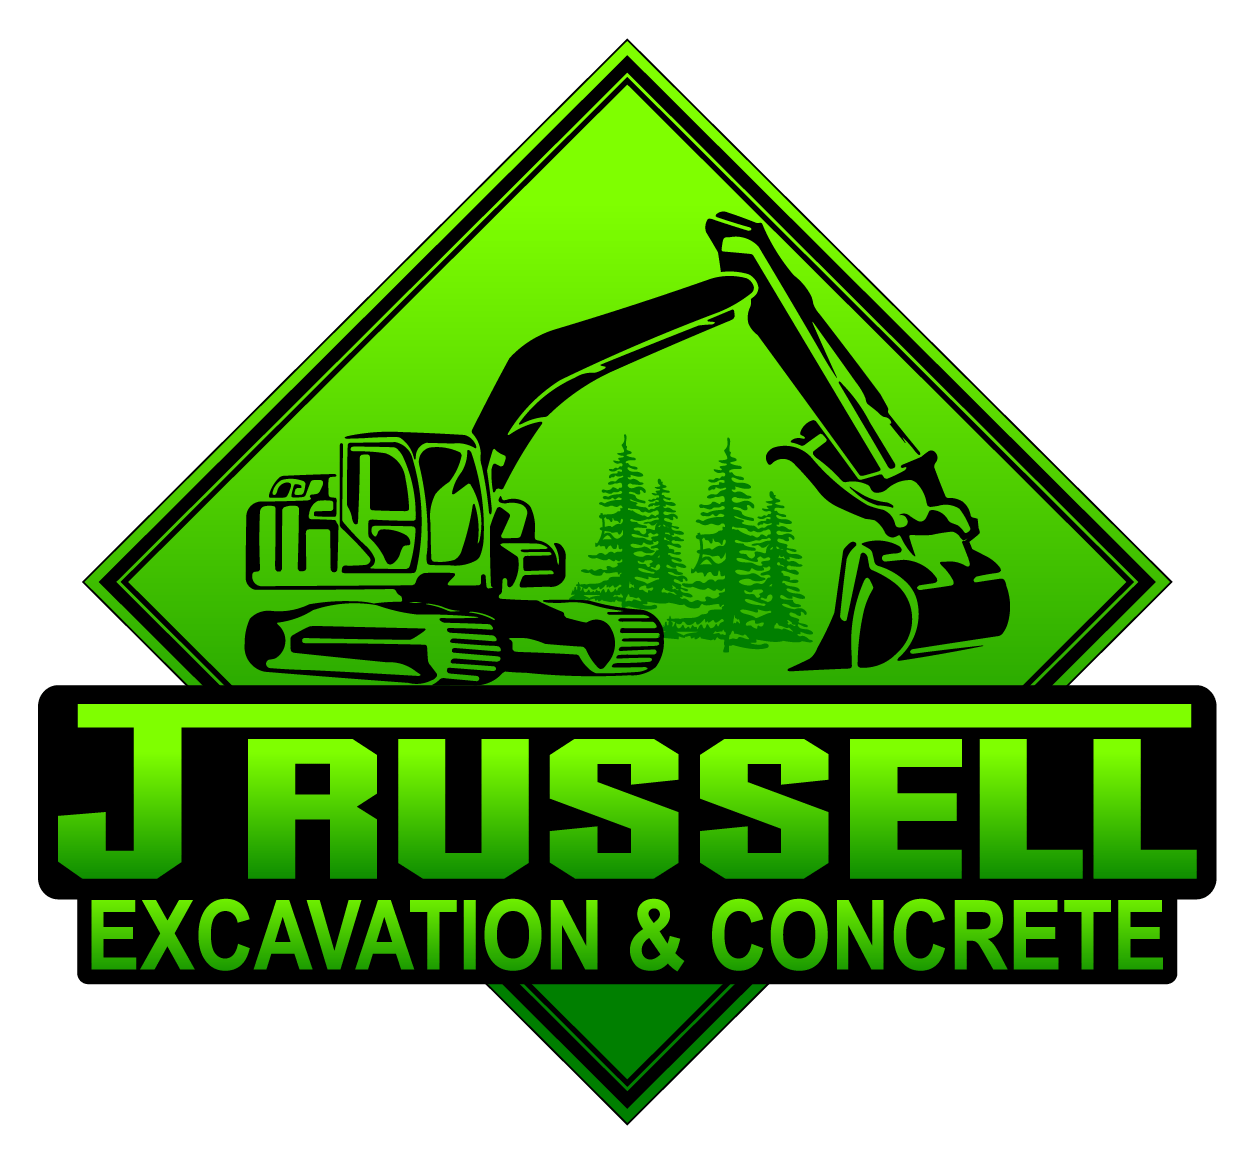 J-Russell-excavation-concrete-02